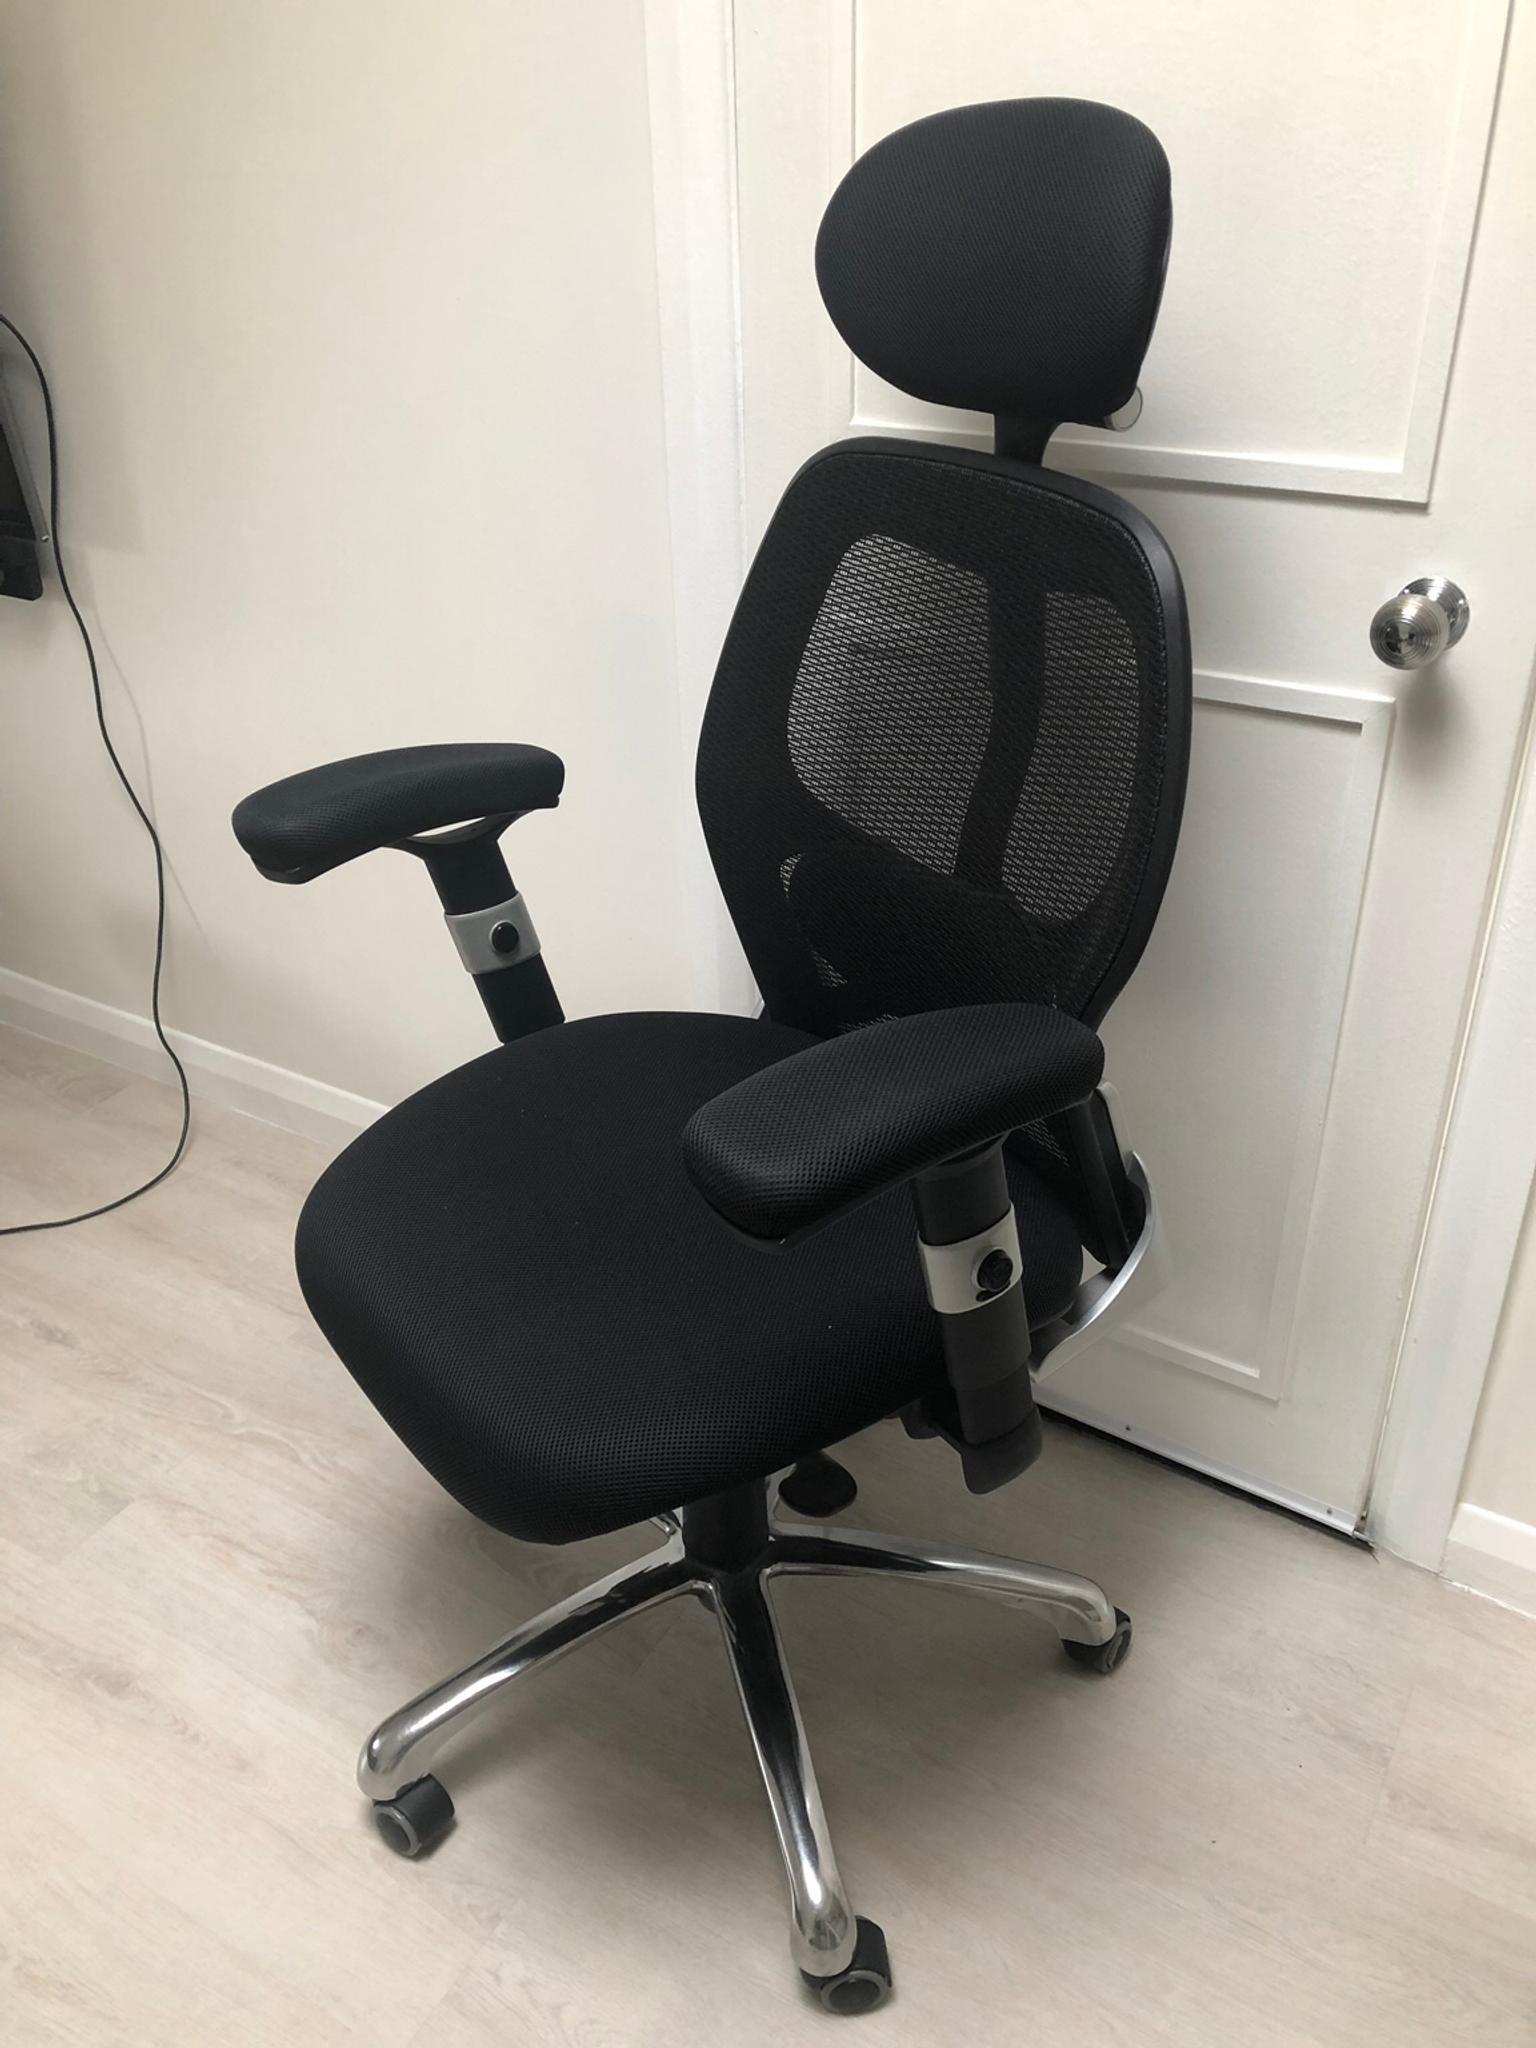 Staples Black Ergonomic Office Chair In W5 Ealing For 65 00 For Sale Shpock